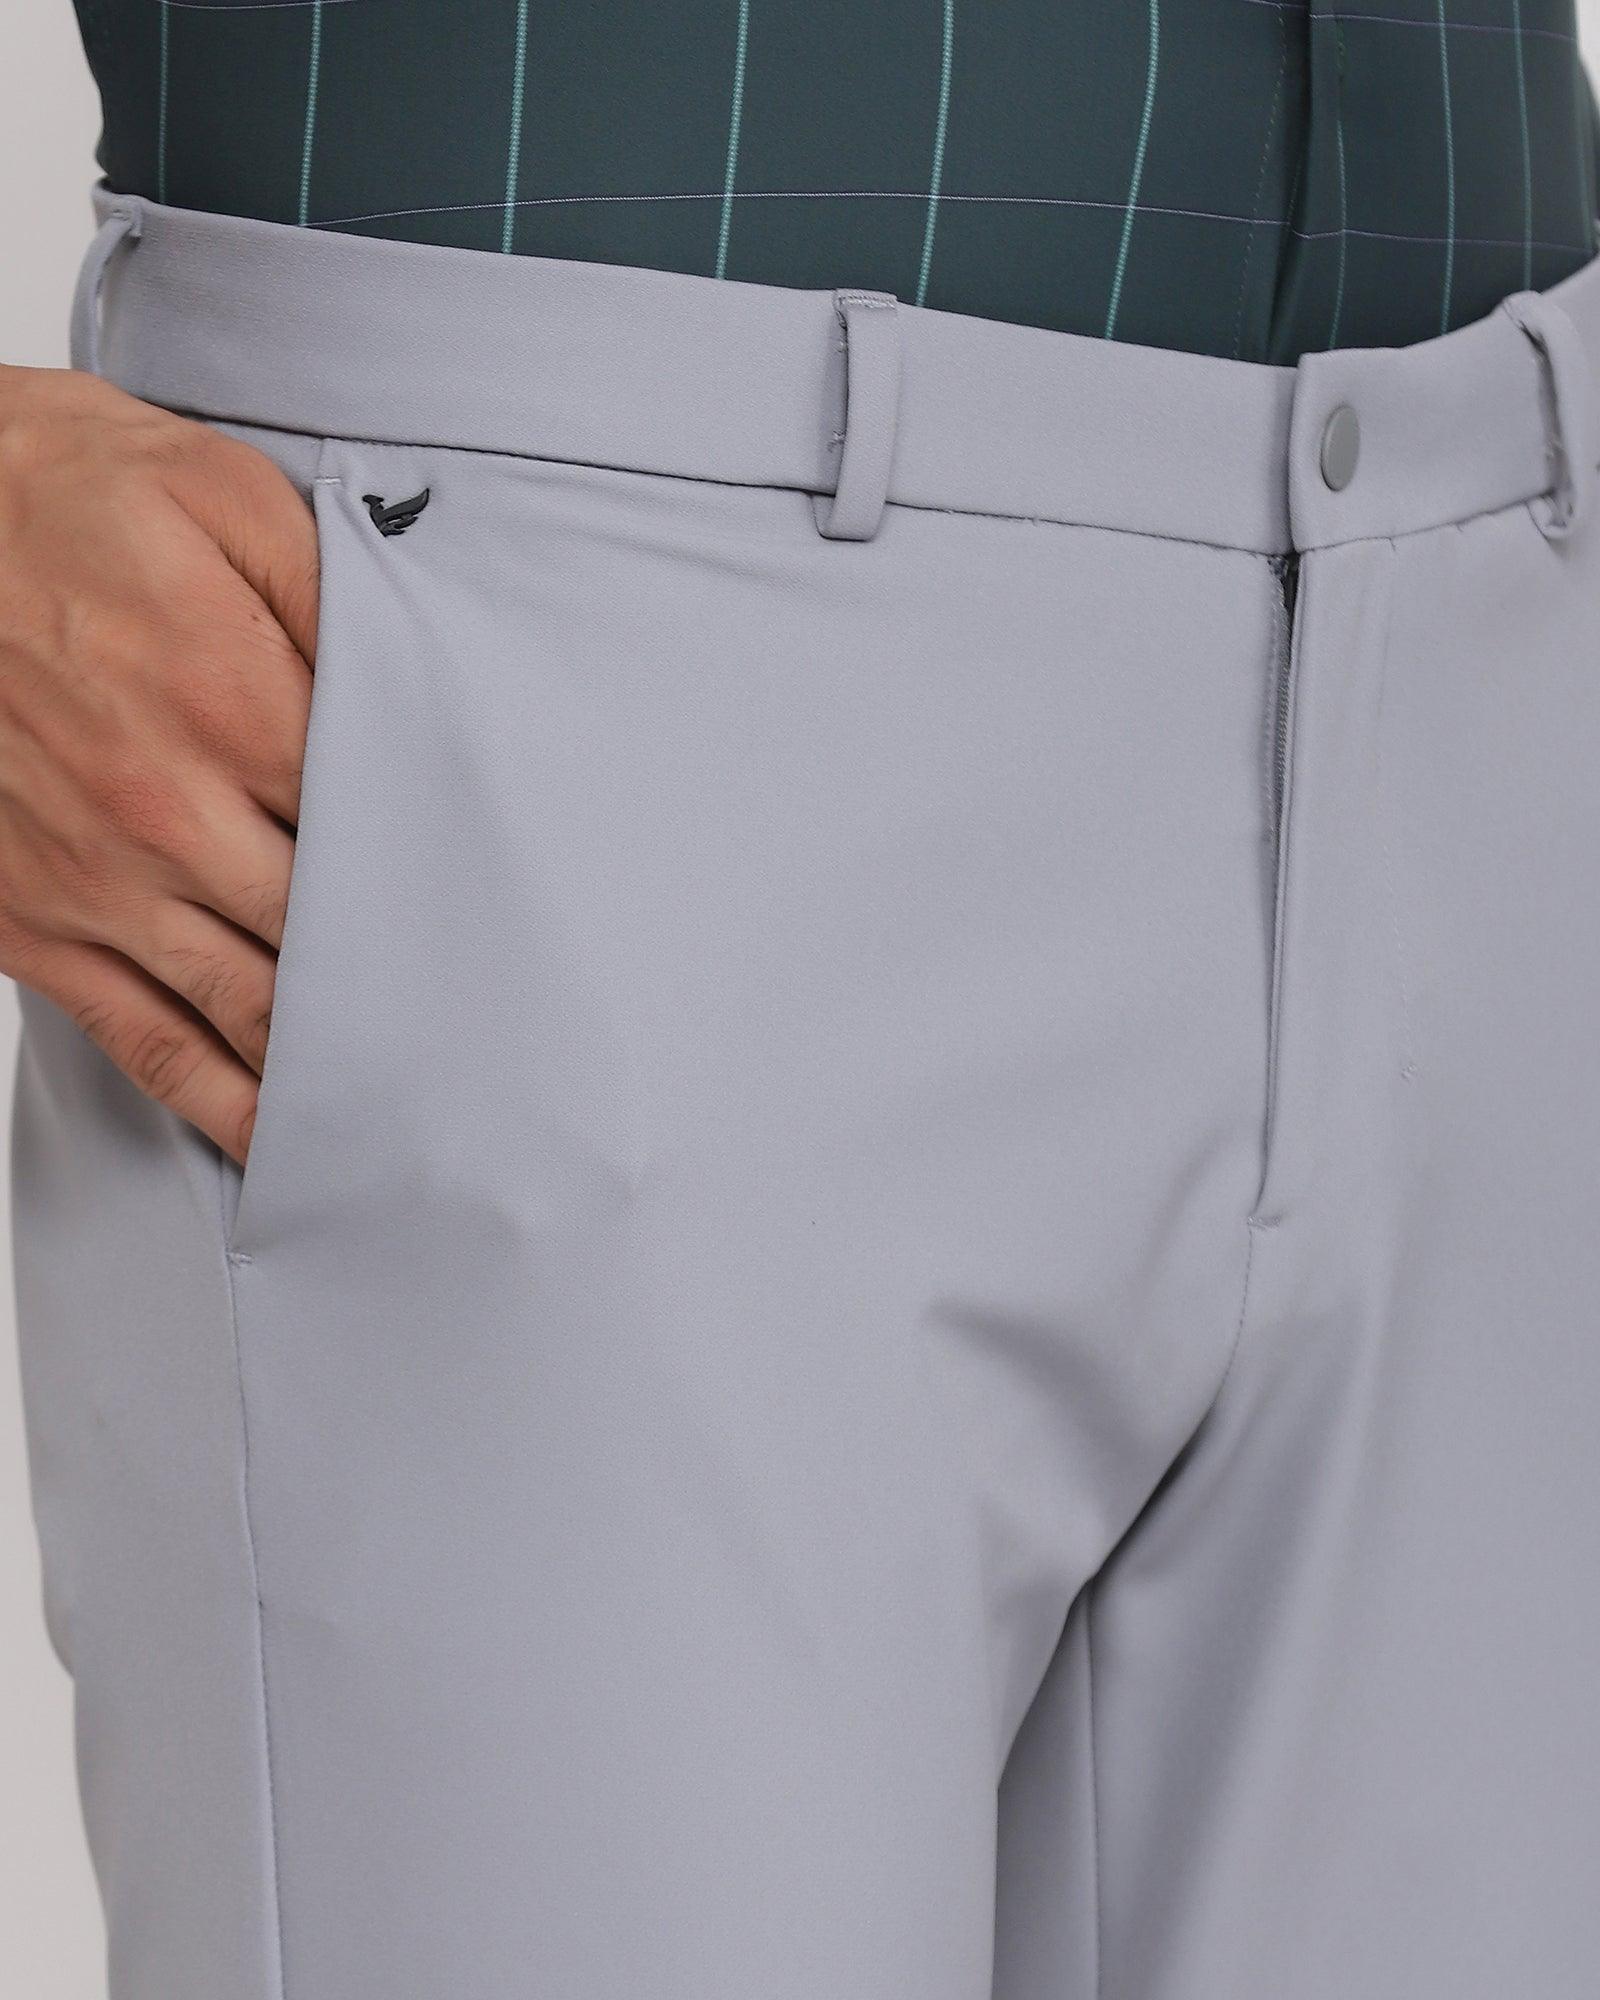 TechPro Slim Fit B-91 Formal Grey Solid Trouser - Ashley